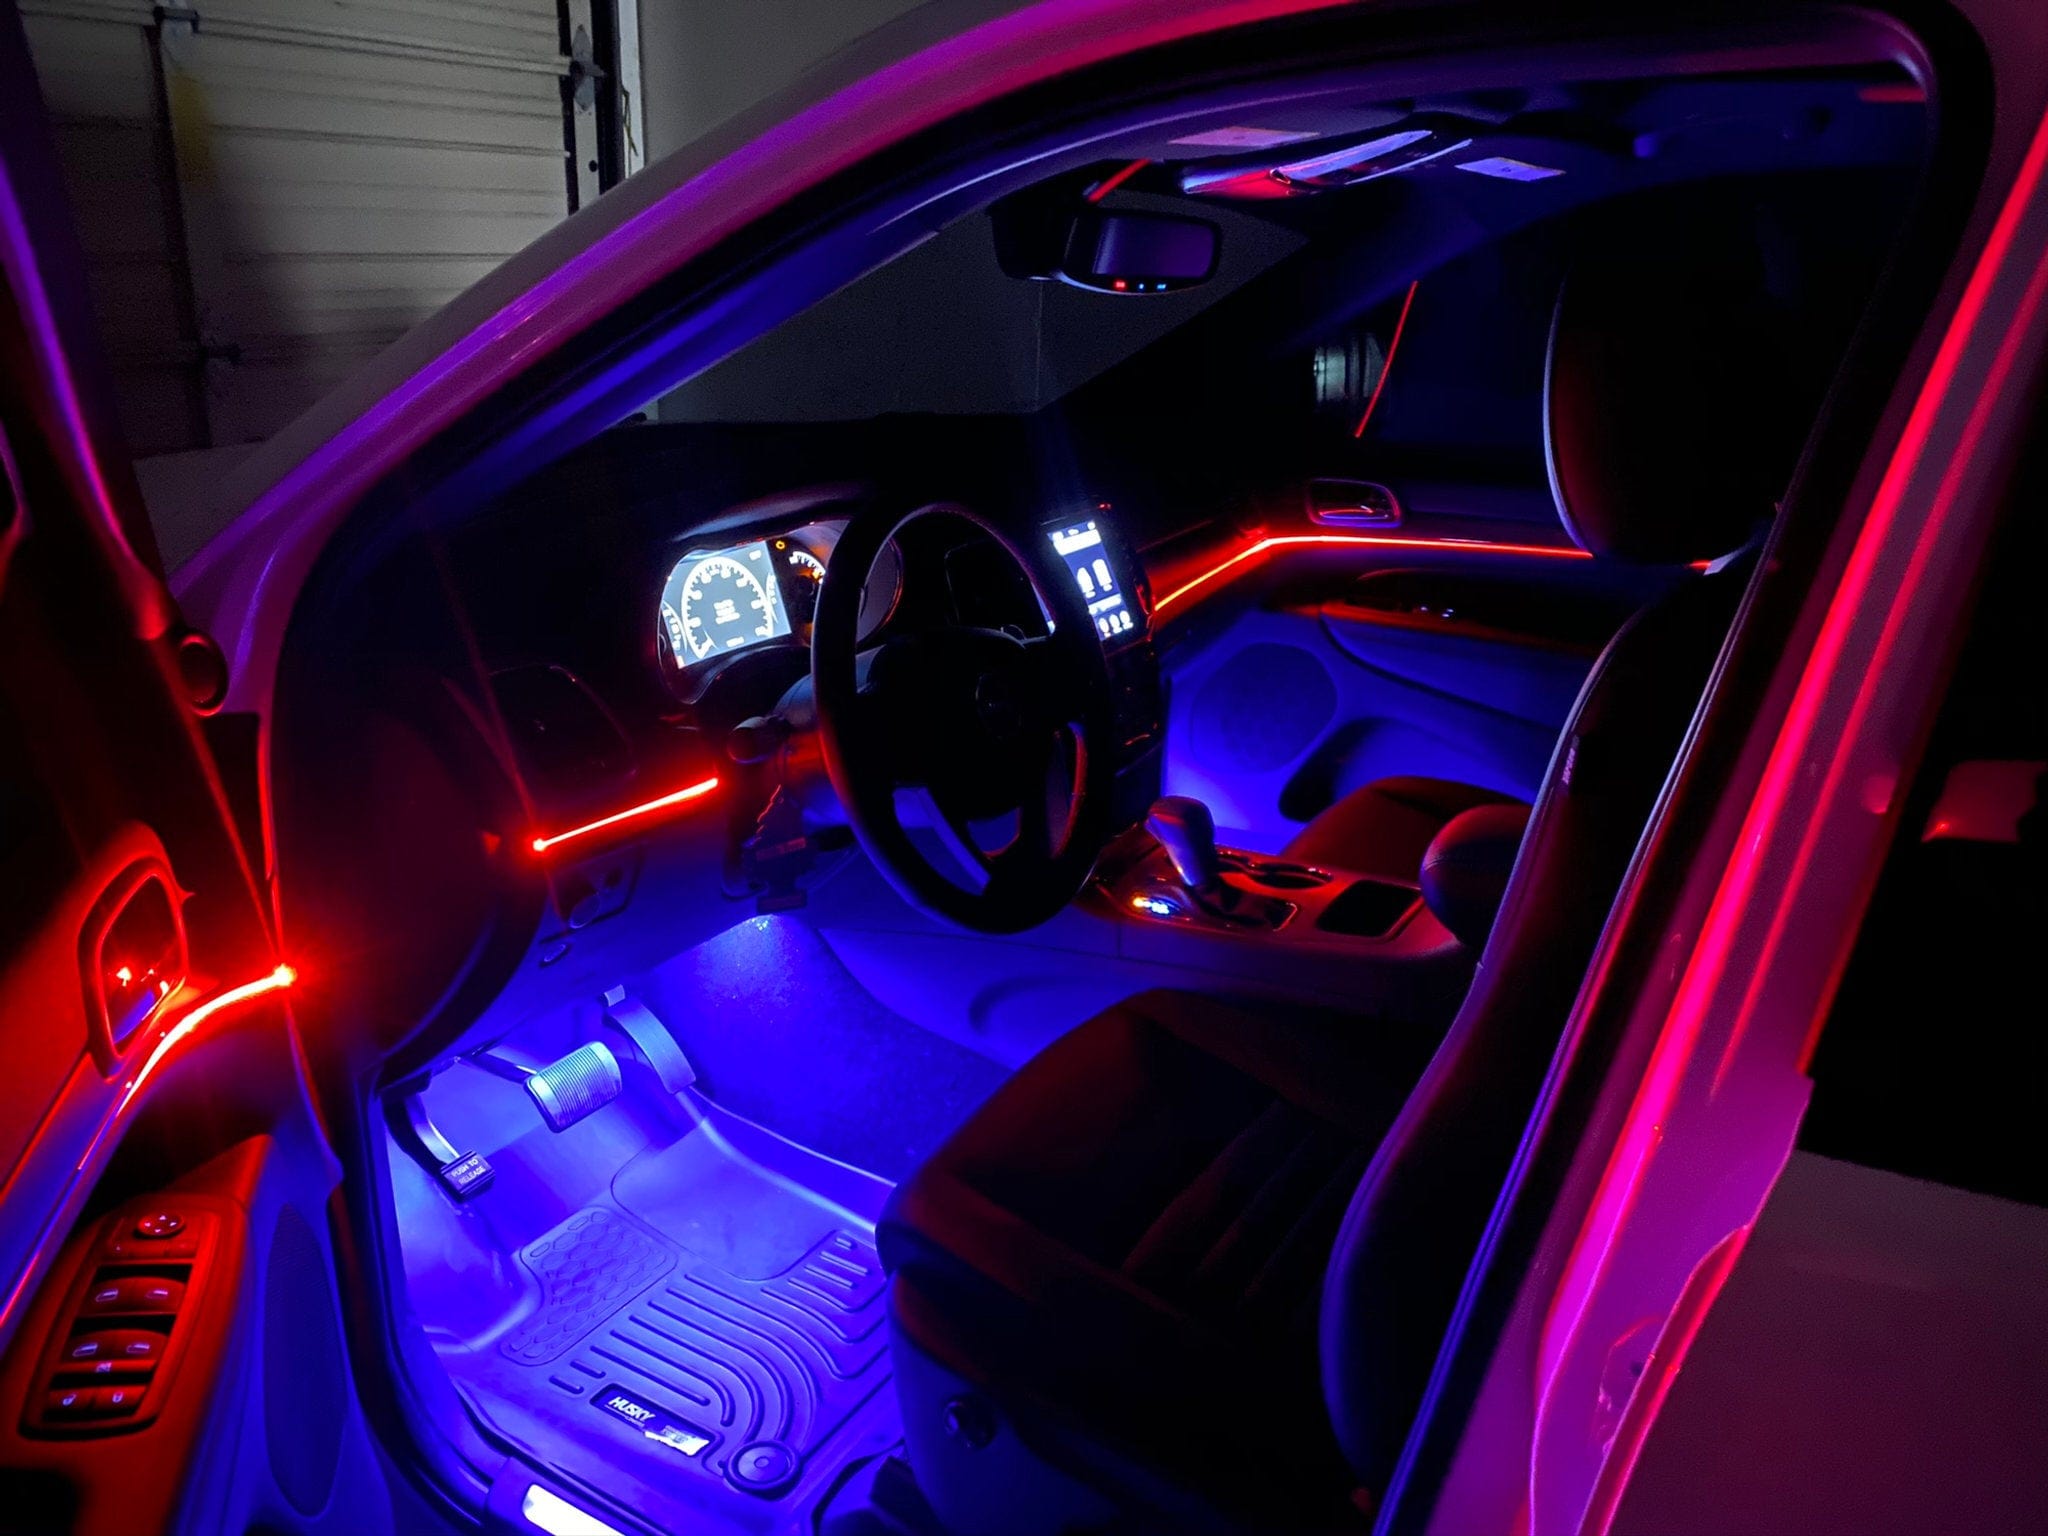 TABEN Auto Innenraum Umgebungsbeleuchtungs Kits 3 Meter Fiber Optic RGB  Multicolor Musik-Sync-Rhythmus Sound Active-Funktion und drahtlose